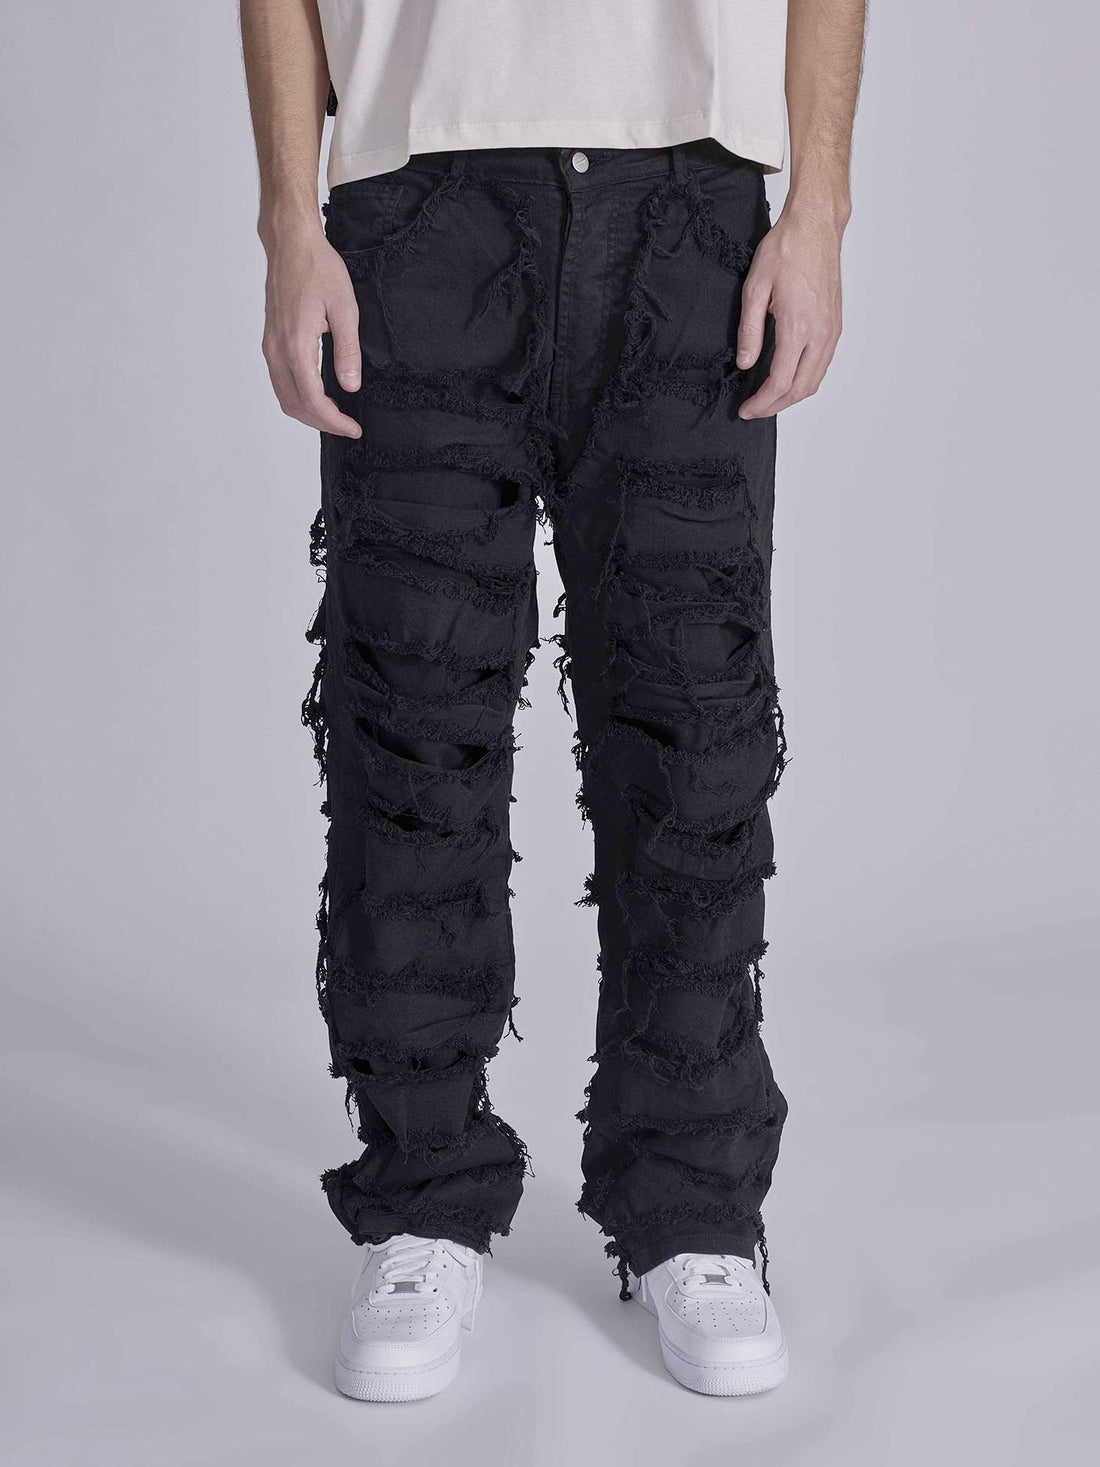 Double pants nero 3.0